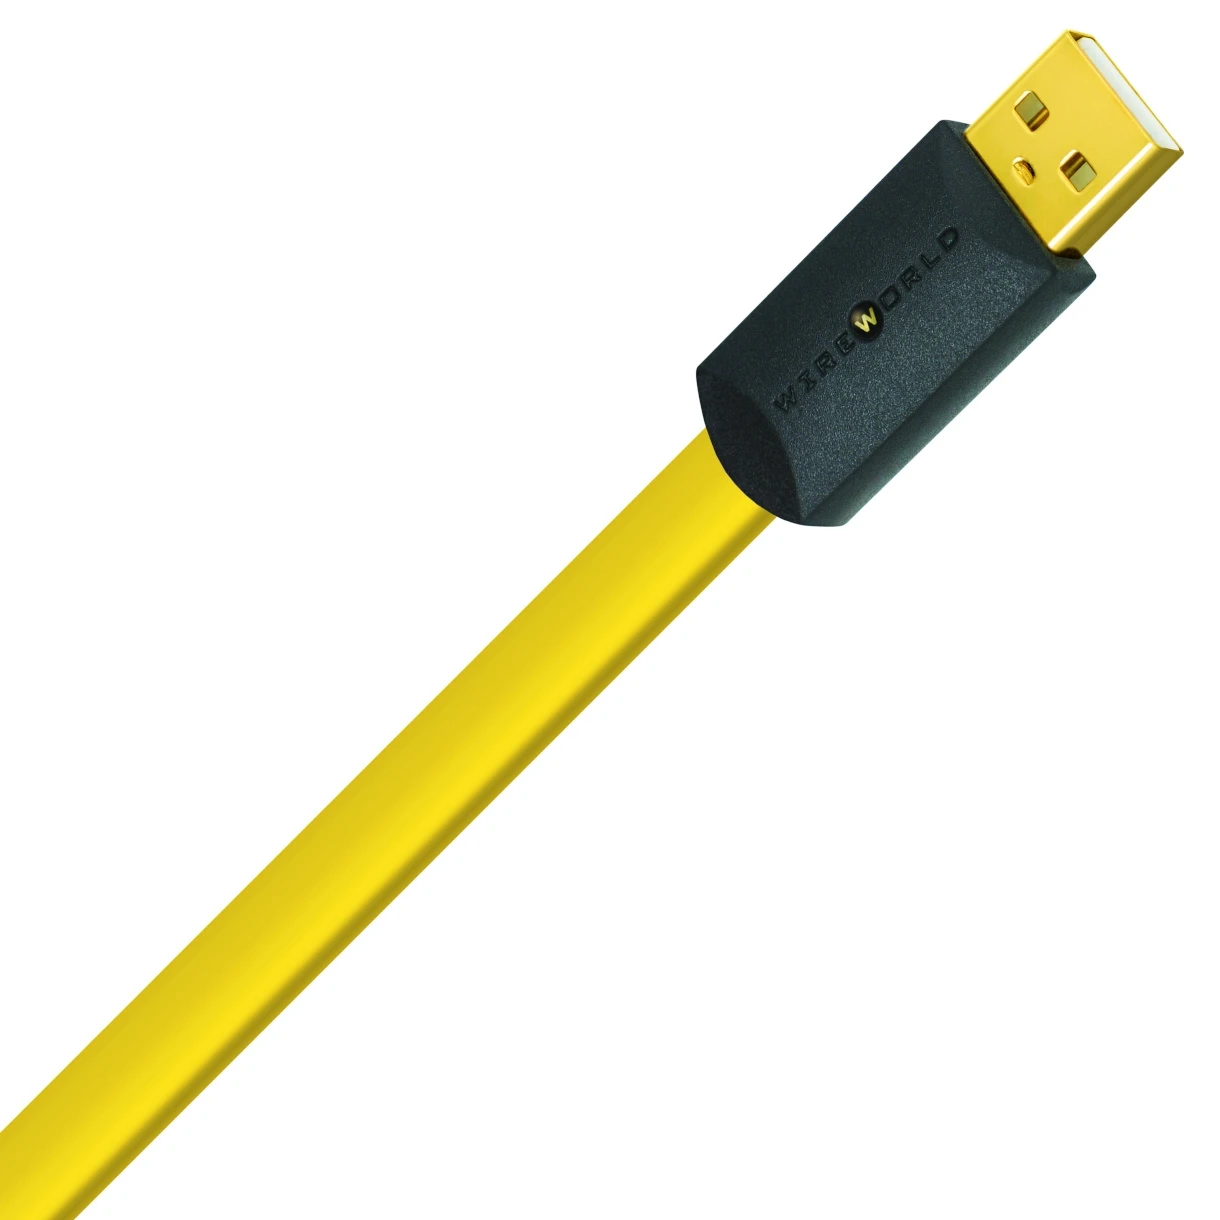 Wireworld-Chroma-8-USB-2-0-A